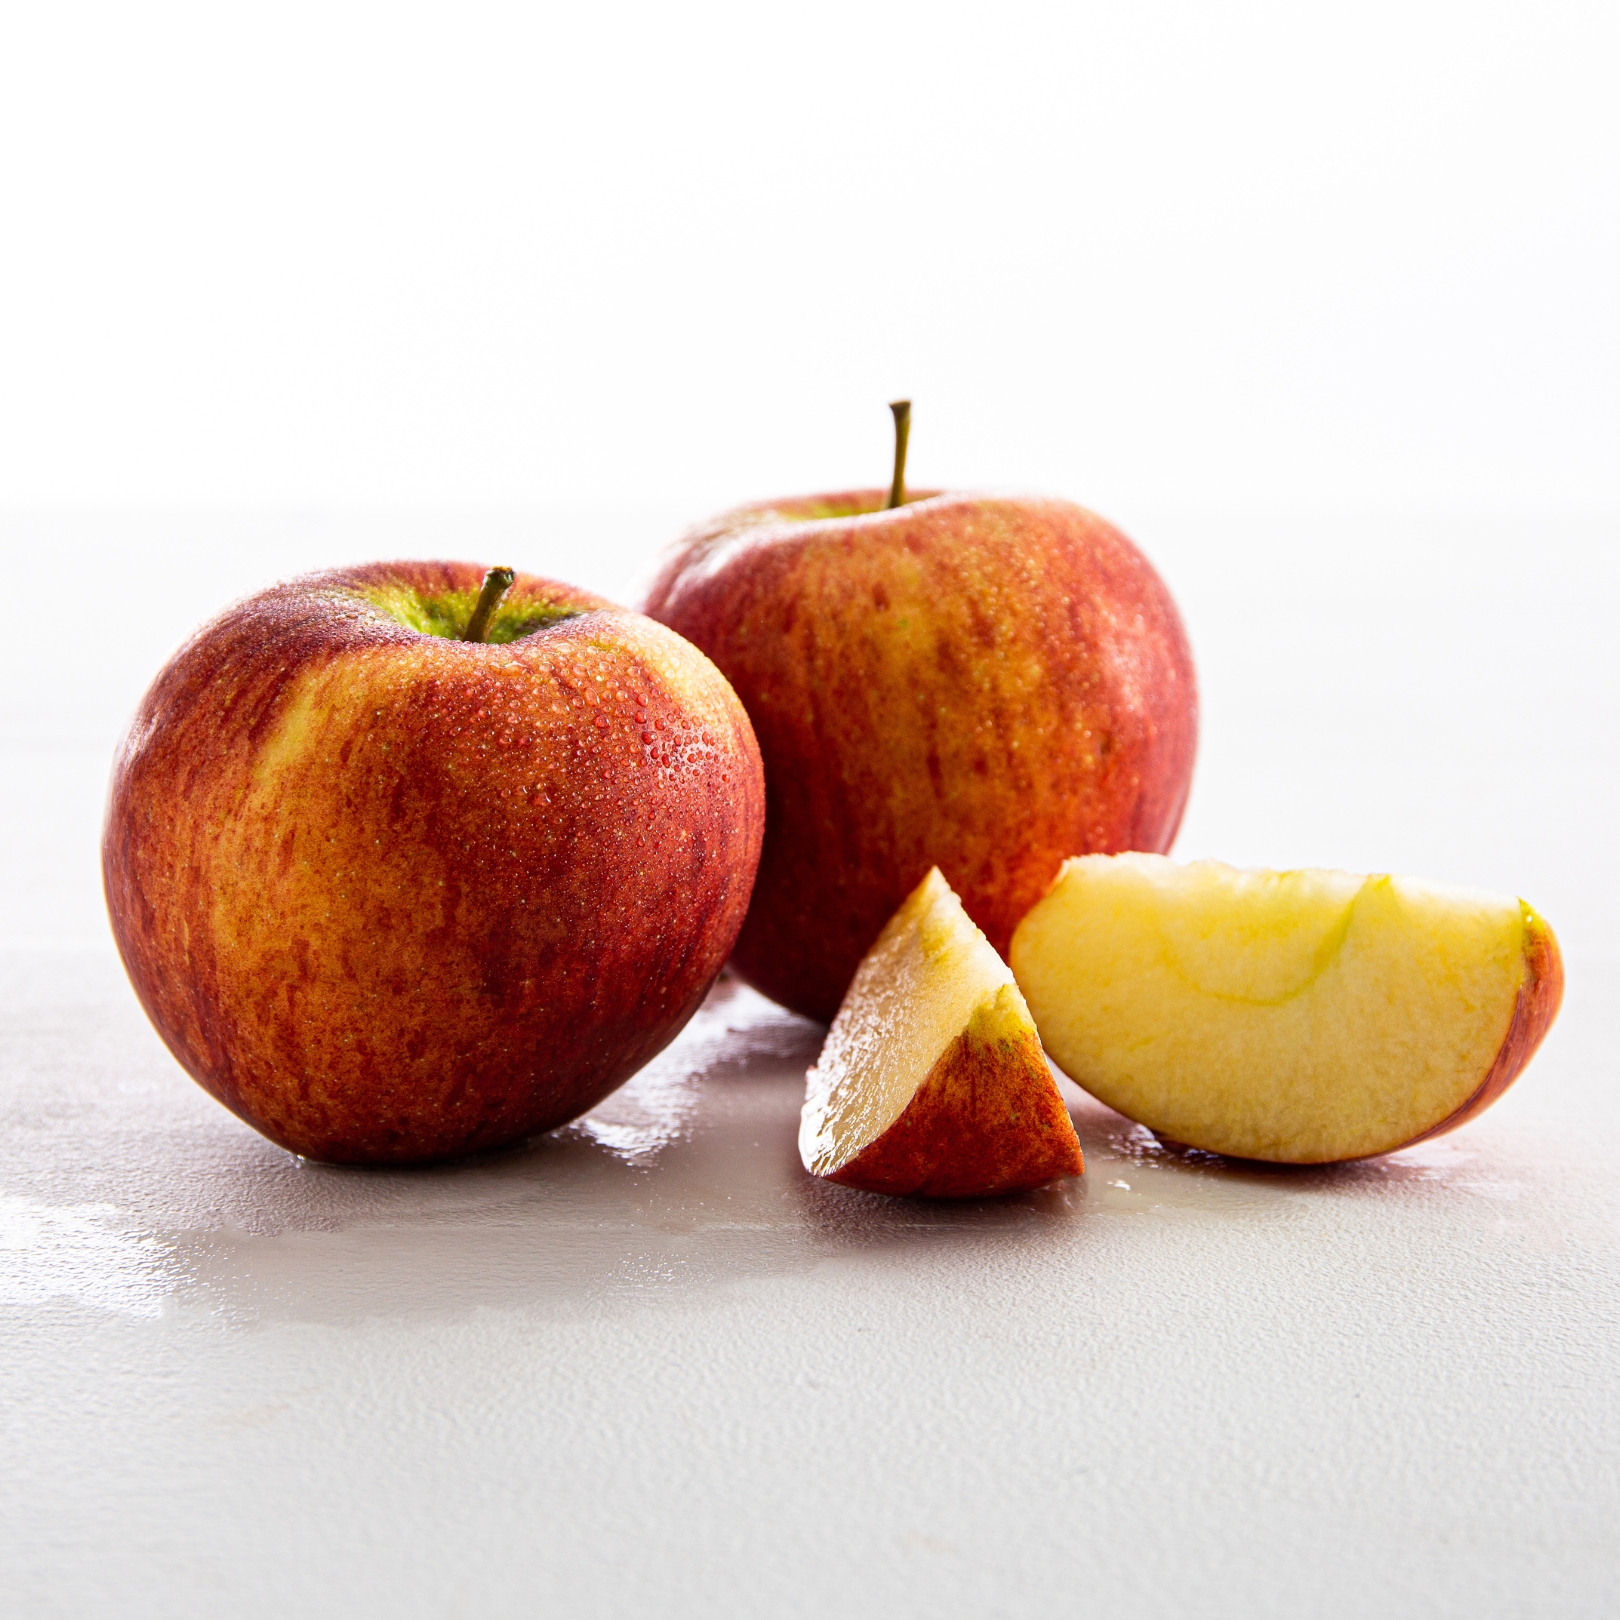 Buy Apples - Ambrosia Online NZ